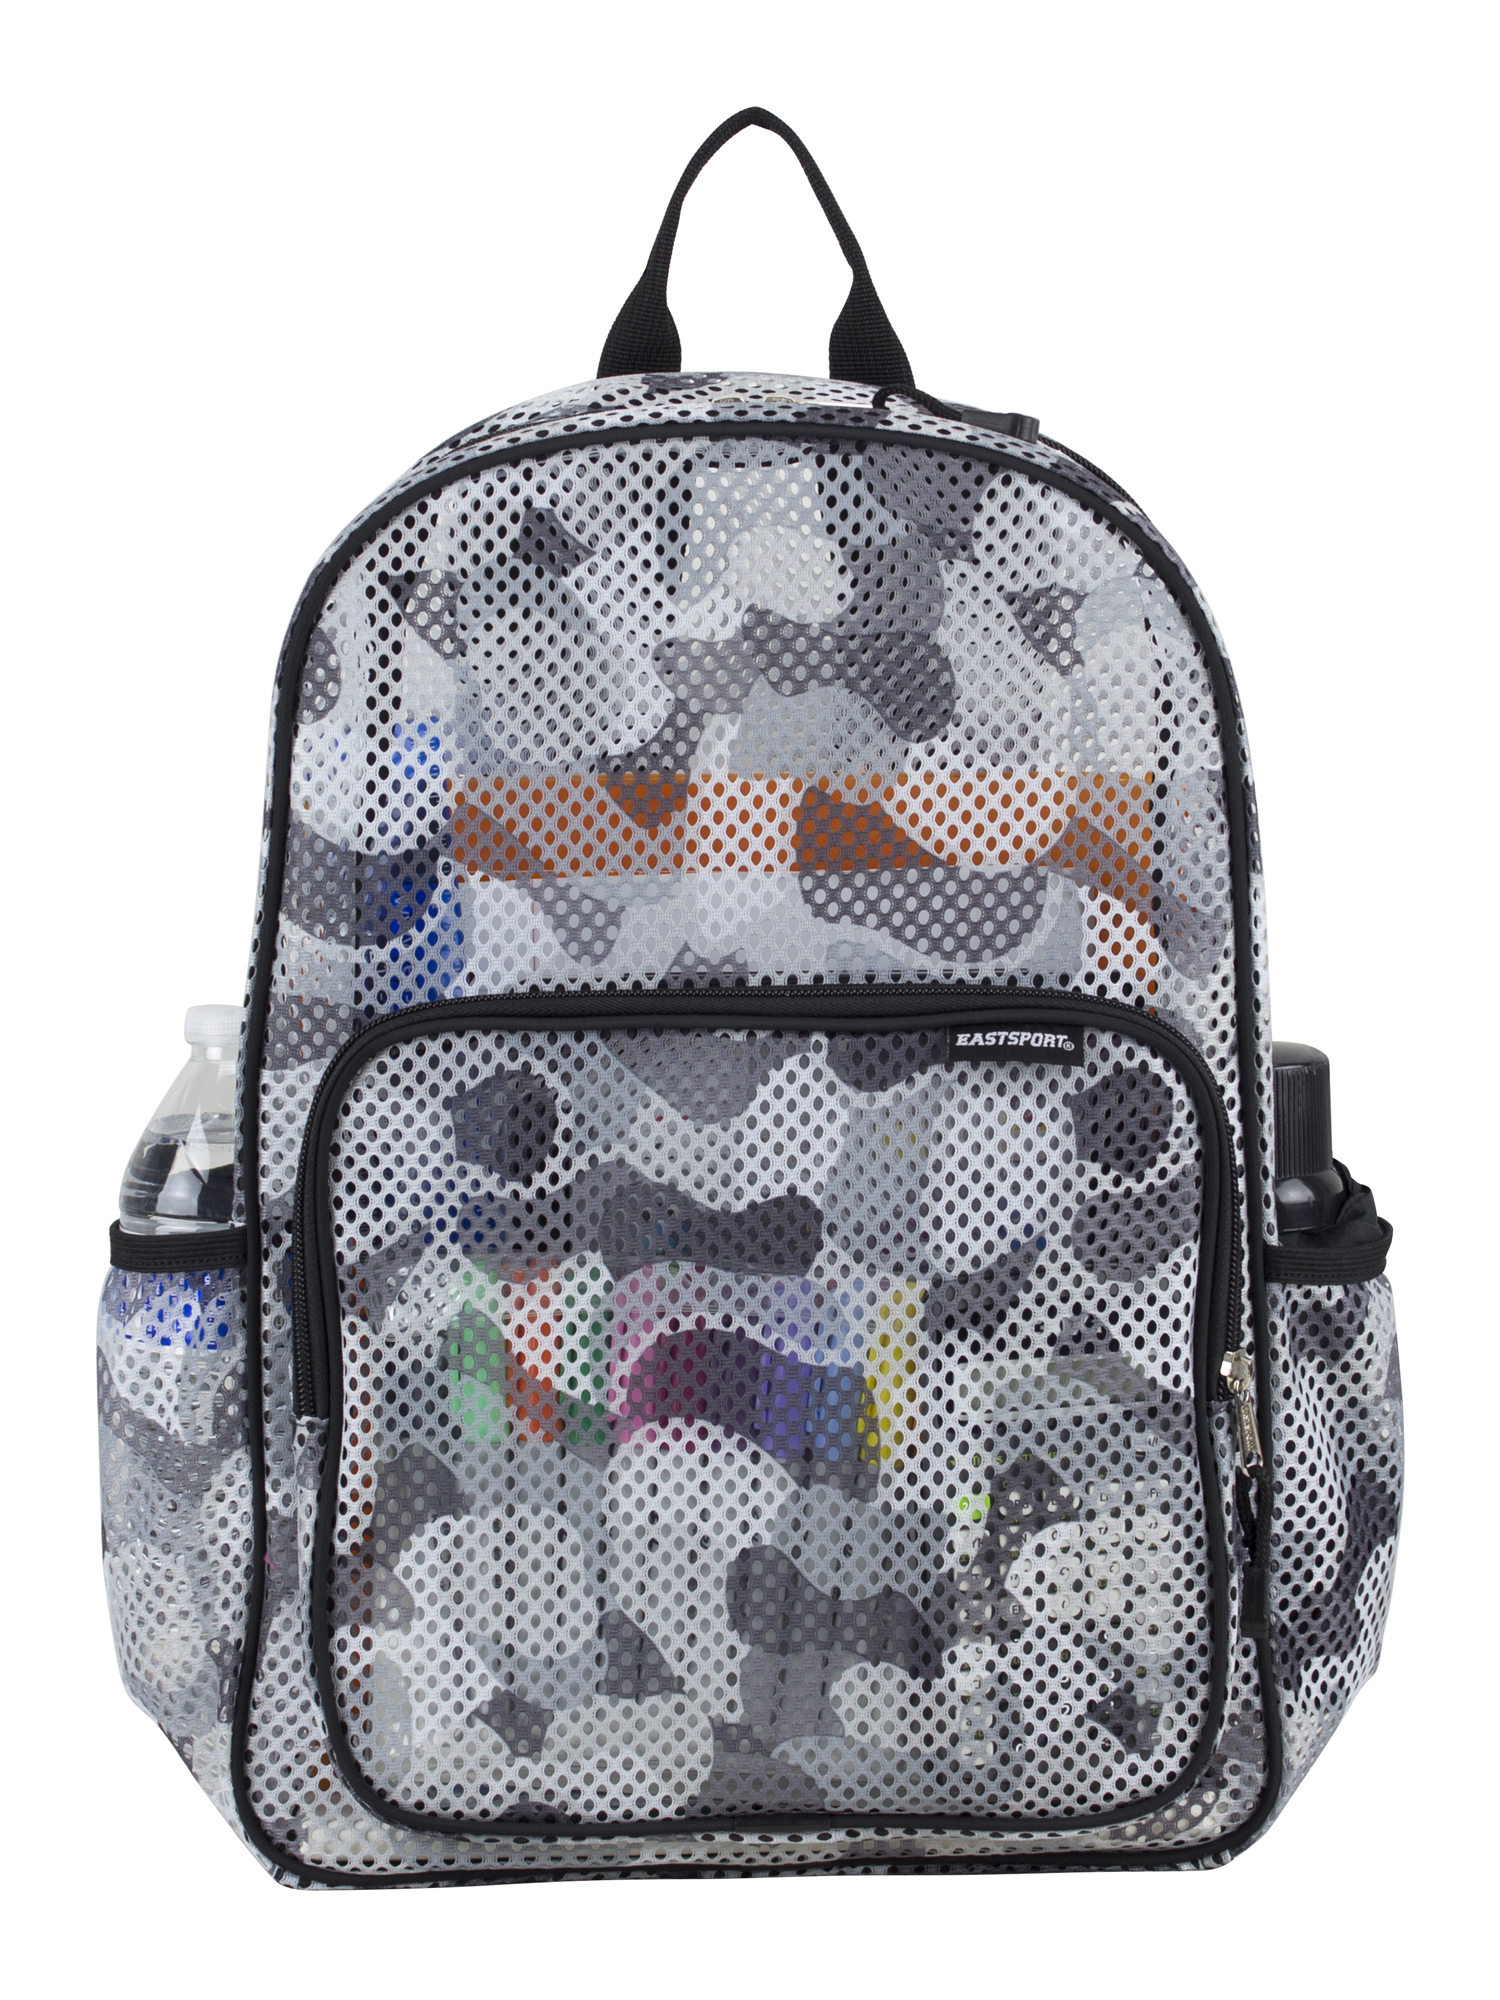 Eastsport Unisex Spirit Mesh Backpack, Grey Cartoon Camouflage Print - image 2 of 6